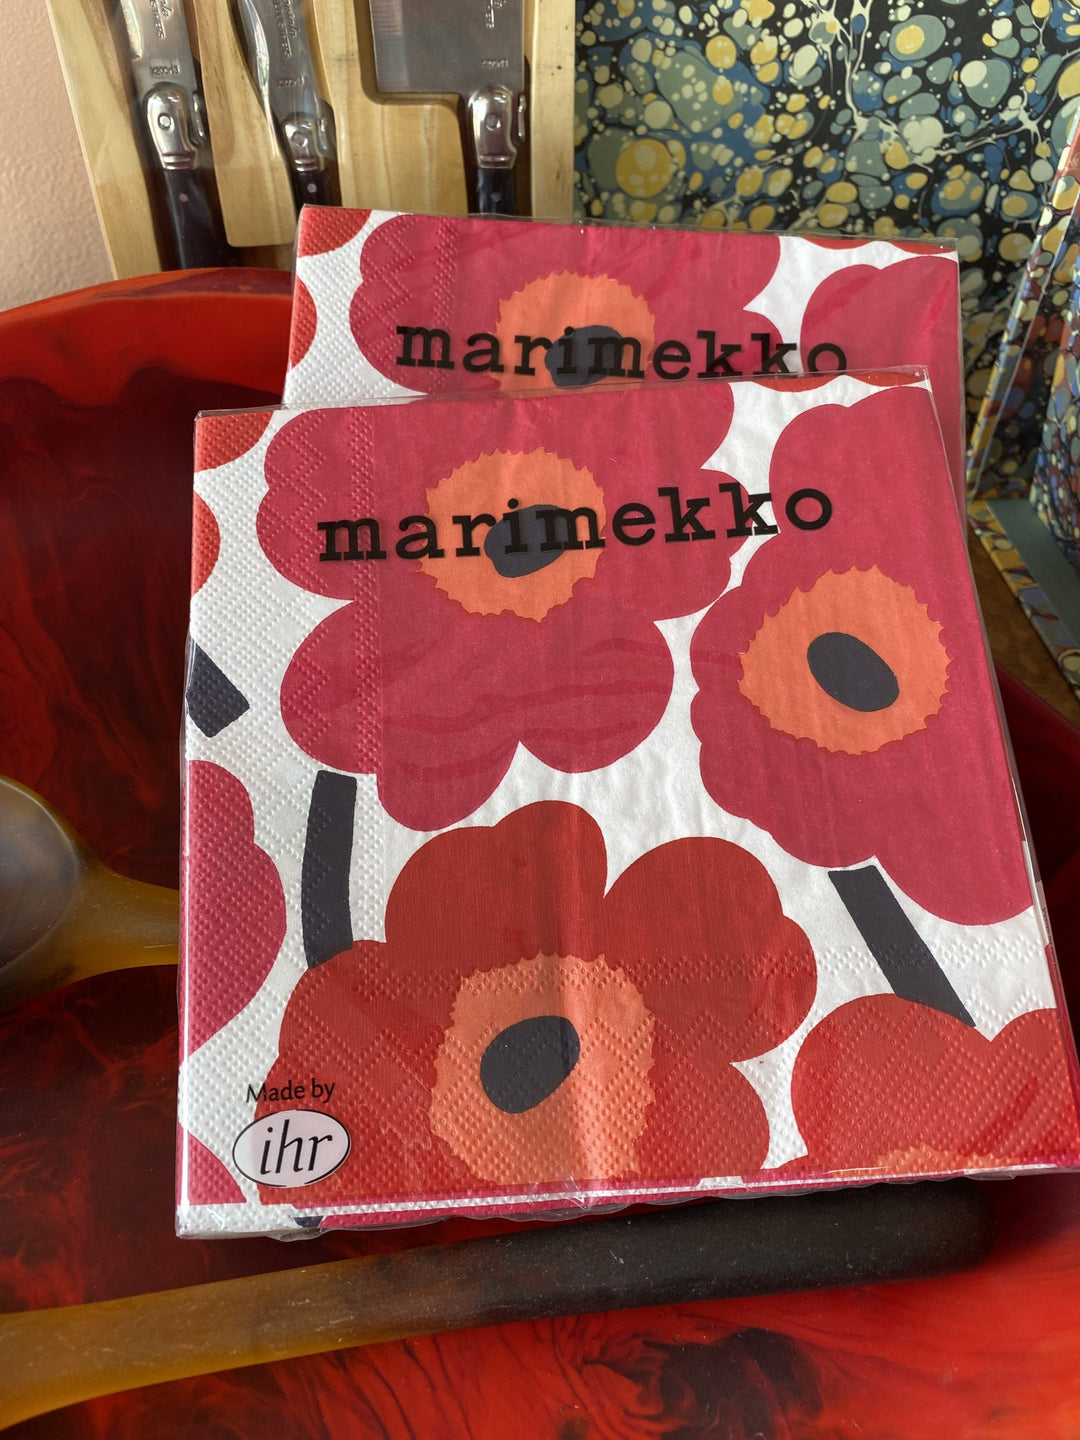 Marimekko Unikko Red Paper Napkins Pack of 20